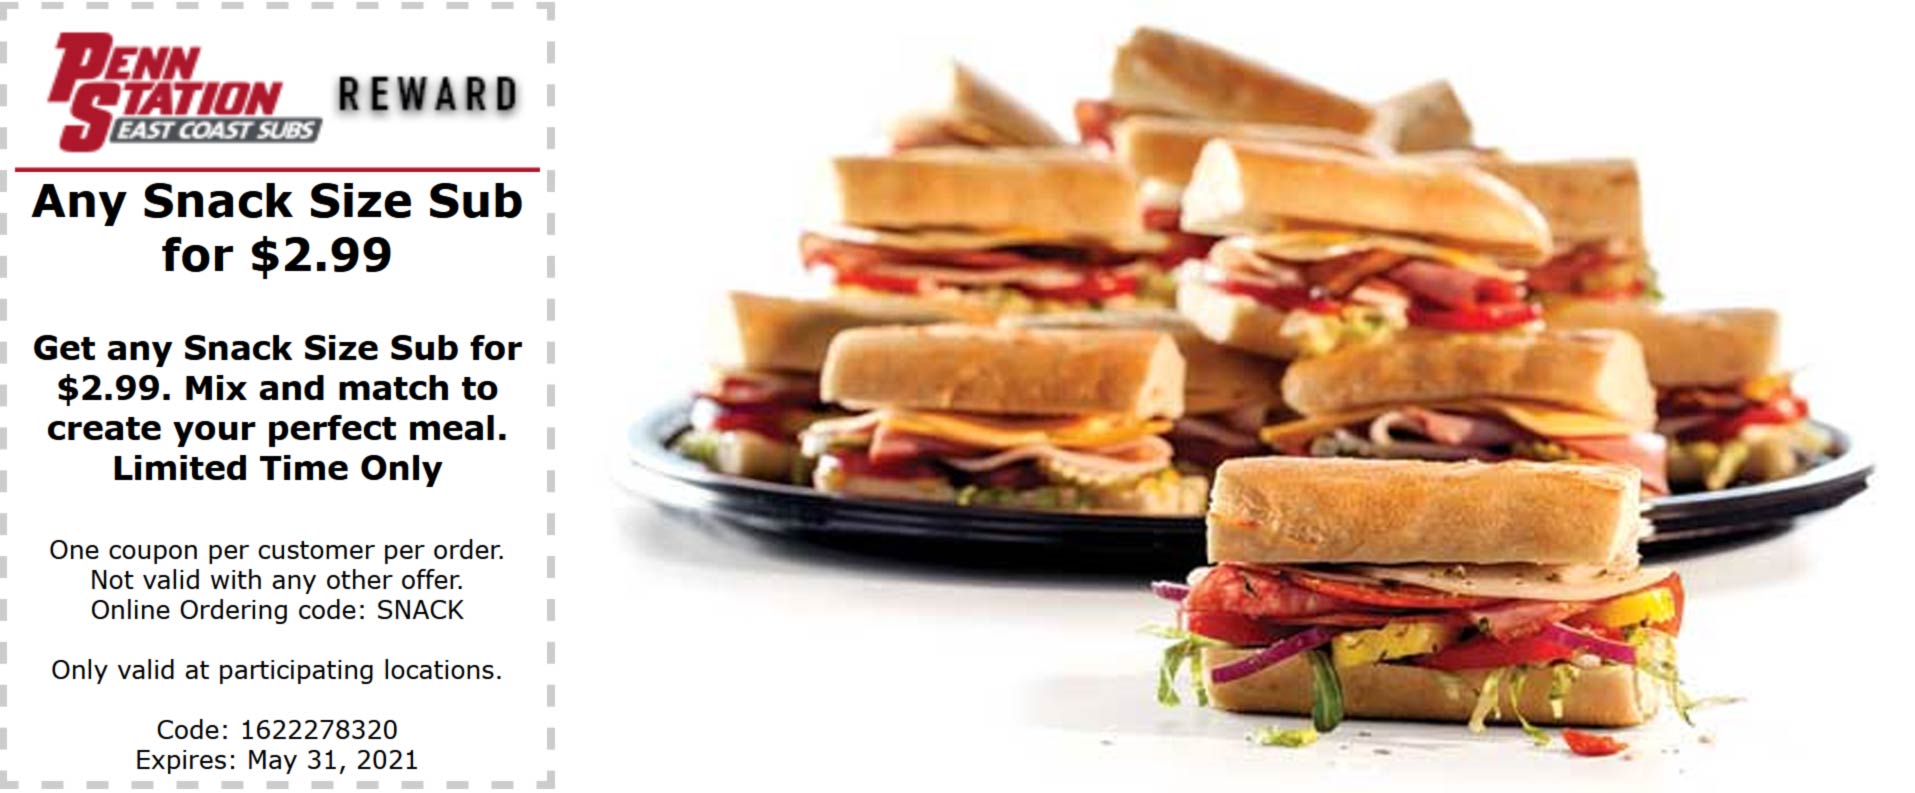 Penn Station restaurants Coupon  $3 snack size sub sandwiches at Penn Station restaurants via promo code SNACK #pennstation 